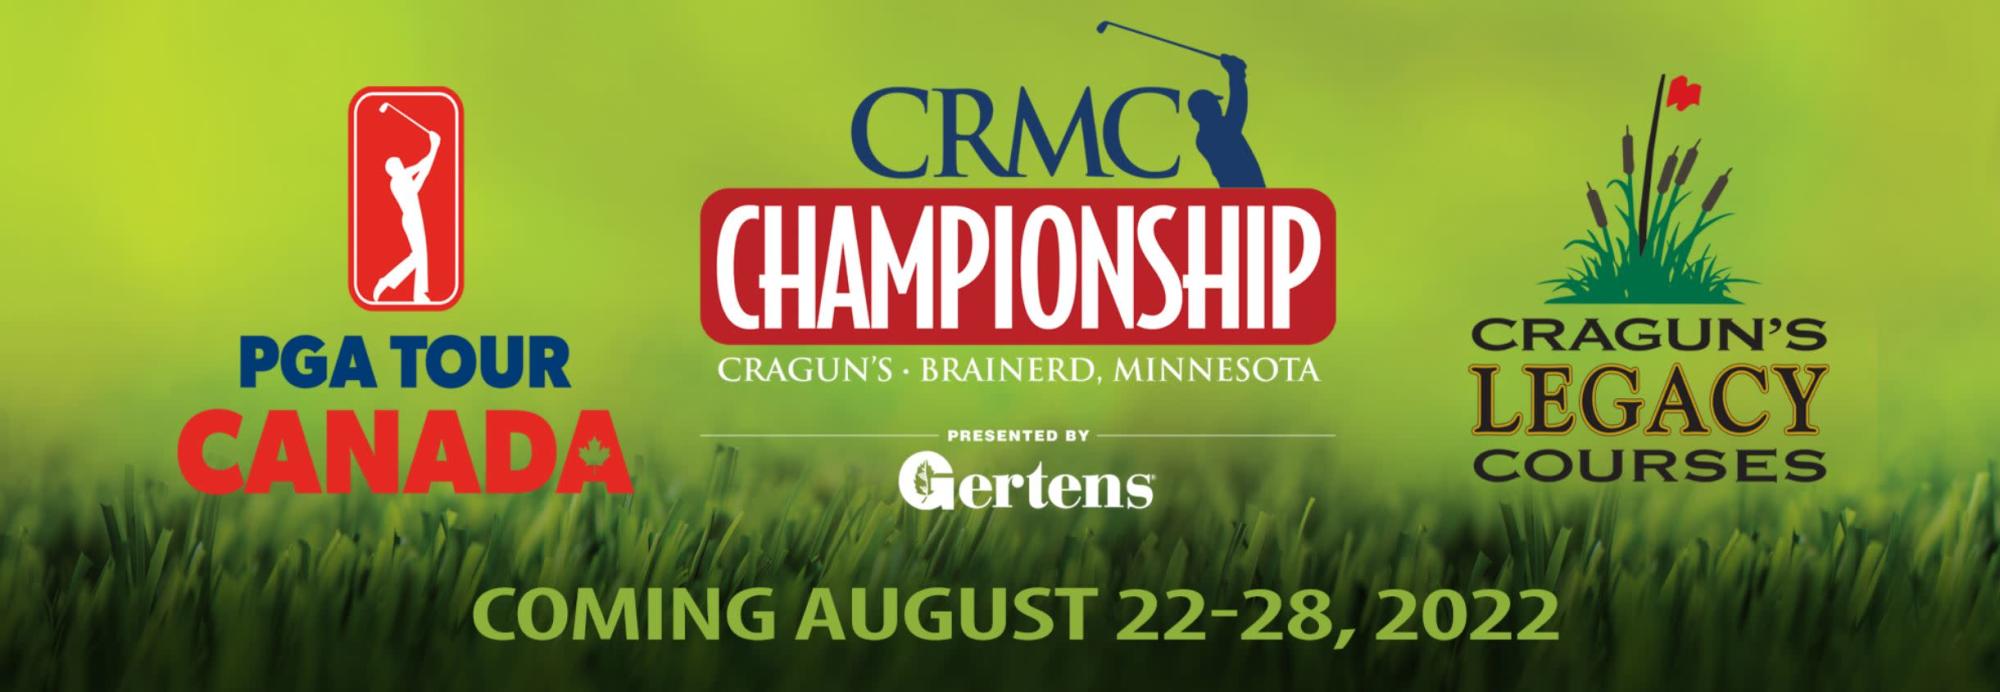 CRMC Championship Area Events Pequot Lakes Minnesota